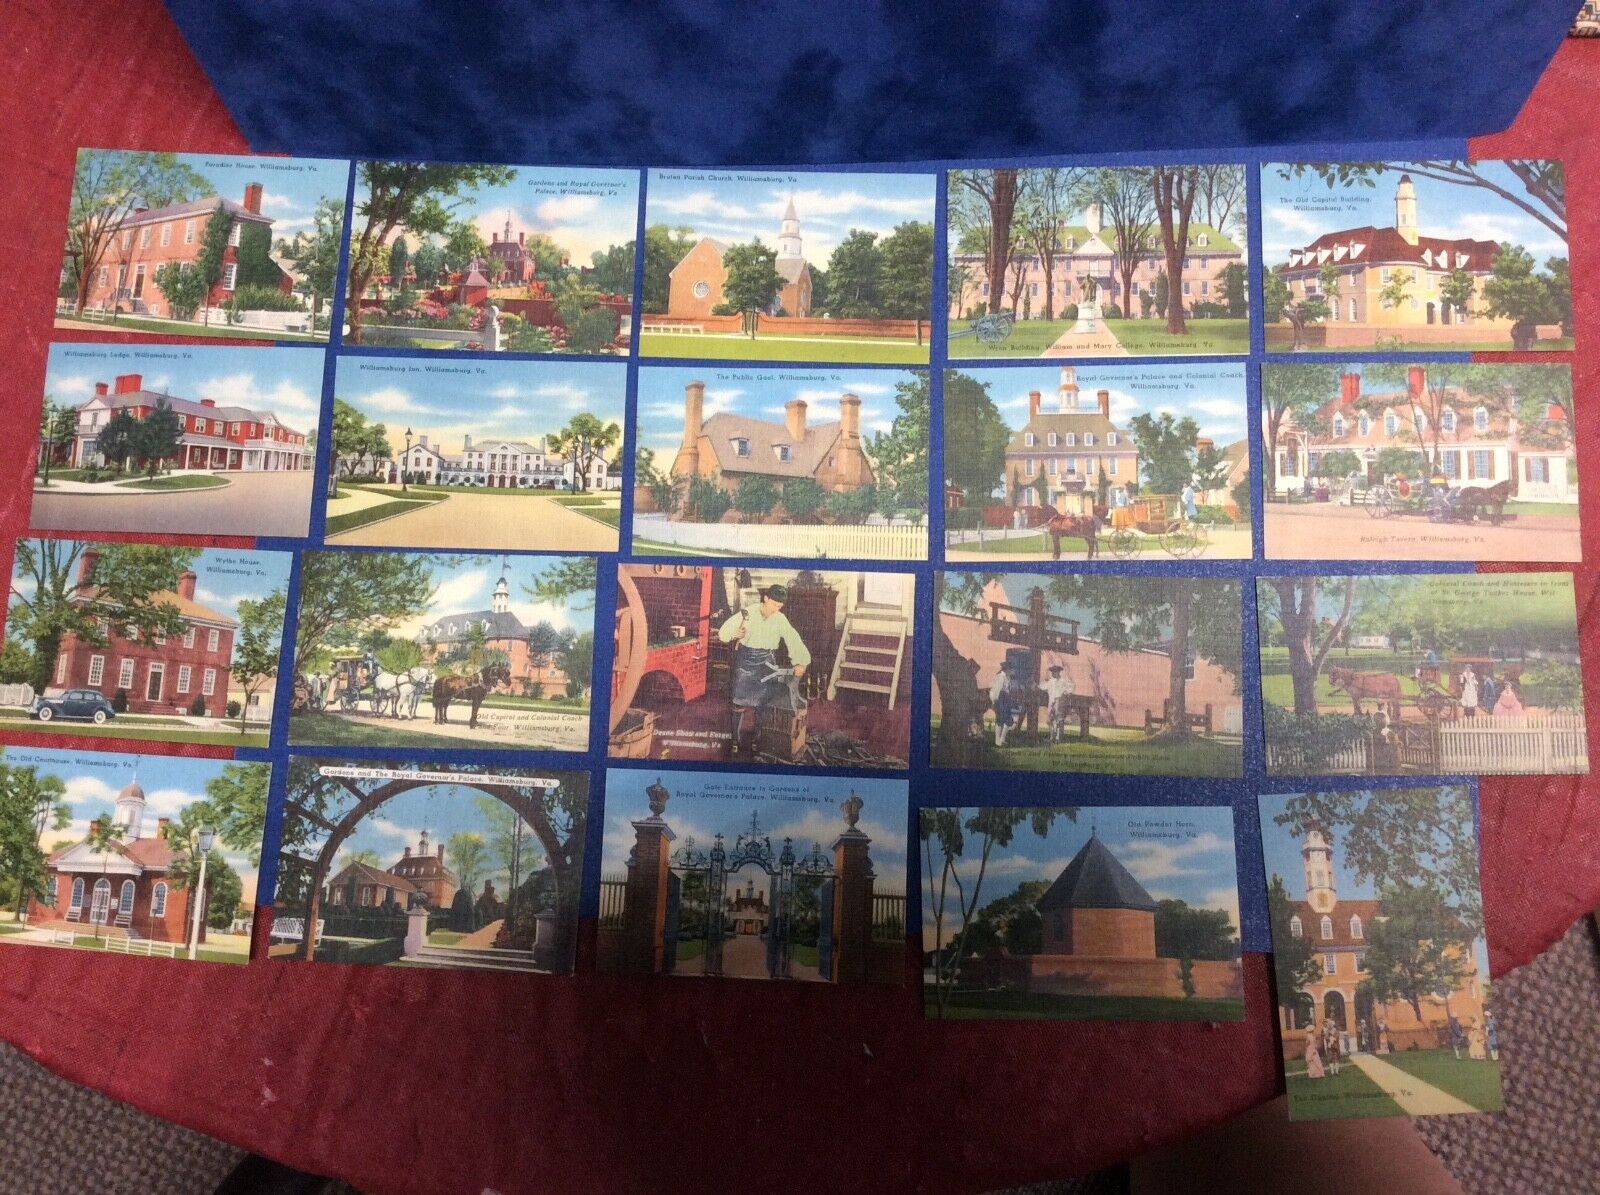 Williamsburg Virginia Postcards Lot of 20